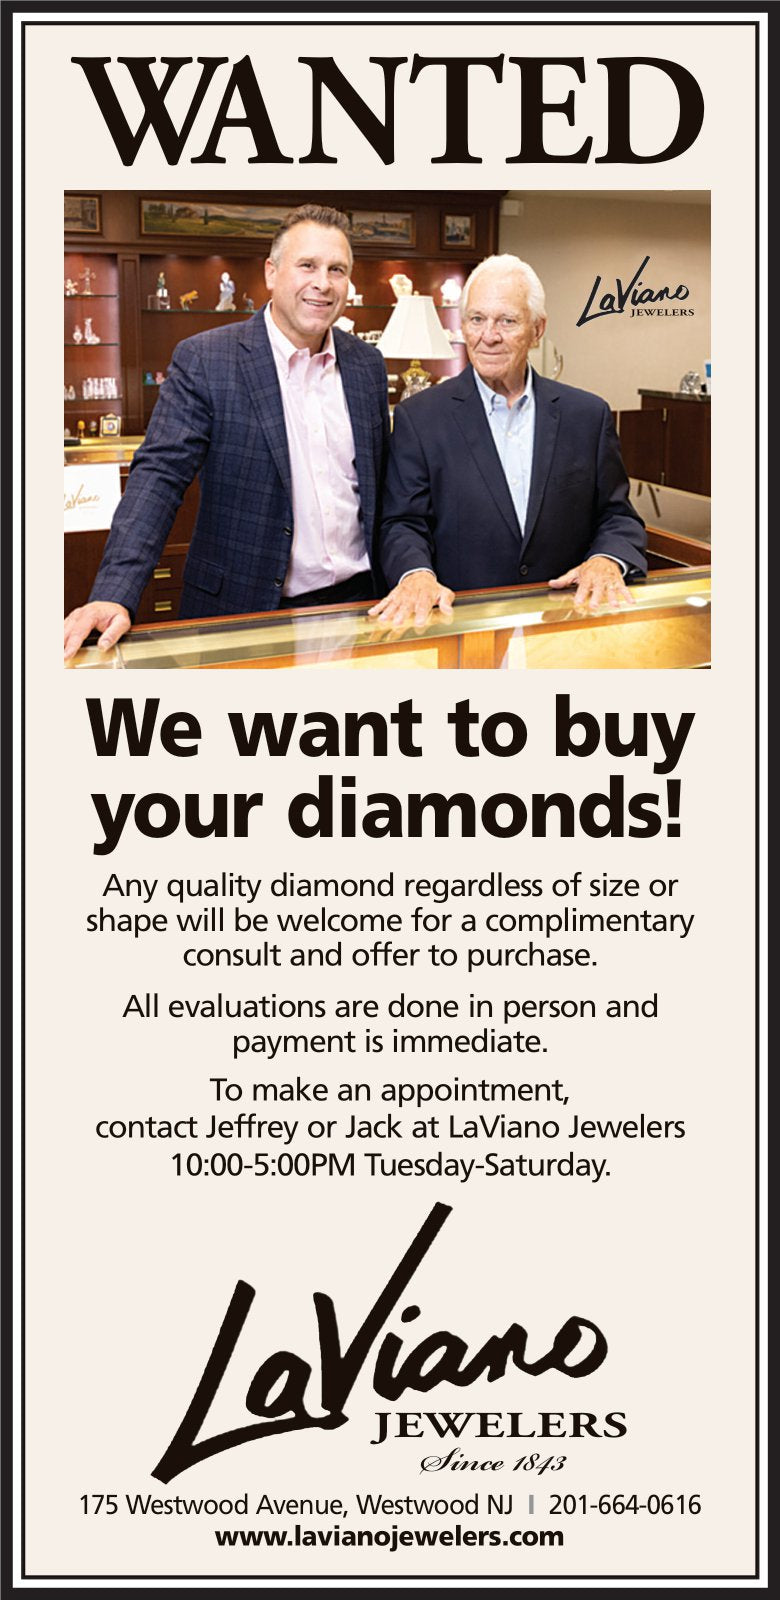 We want to buy your diamonds!